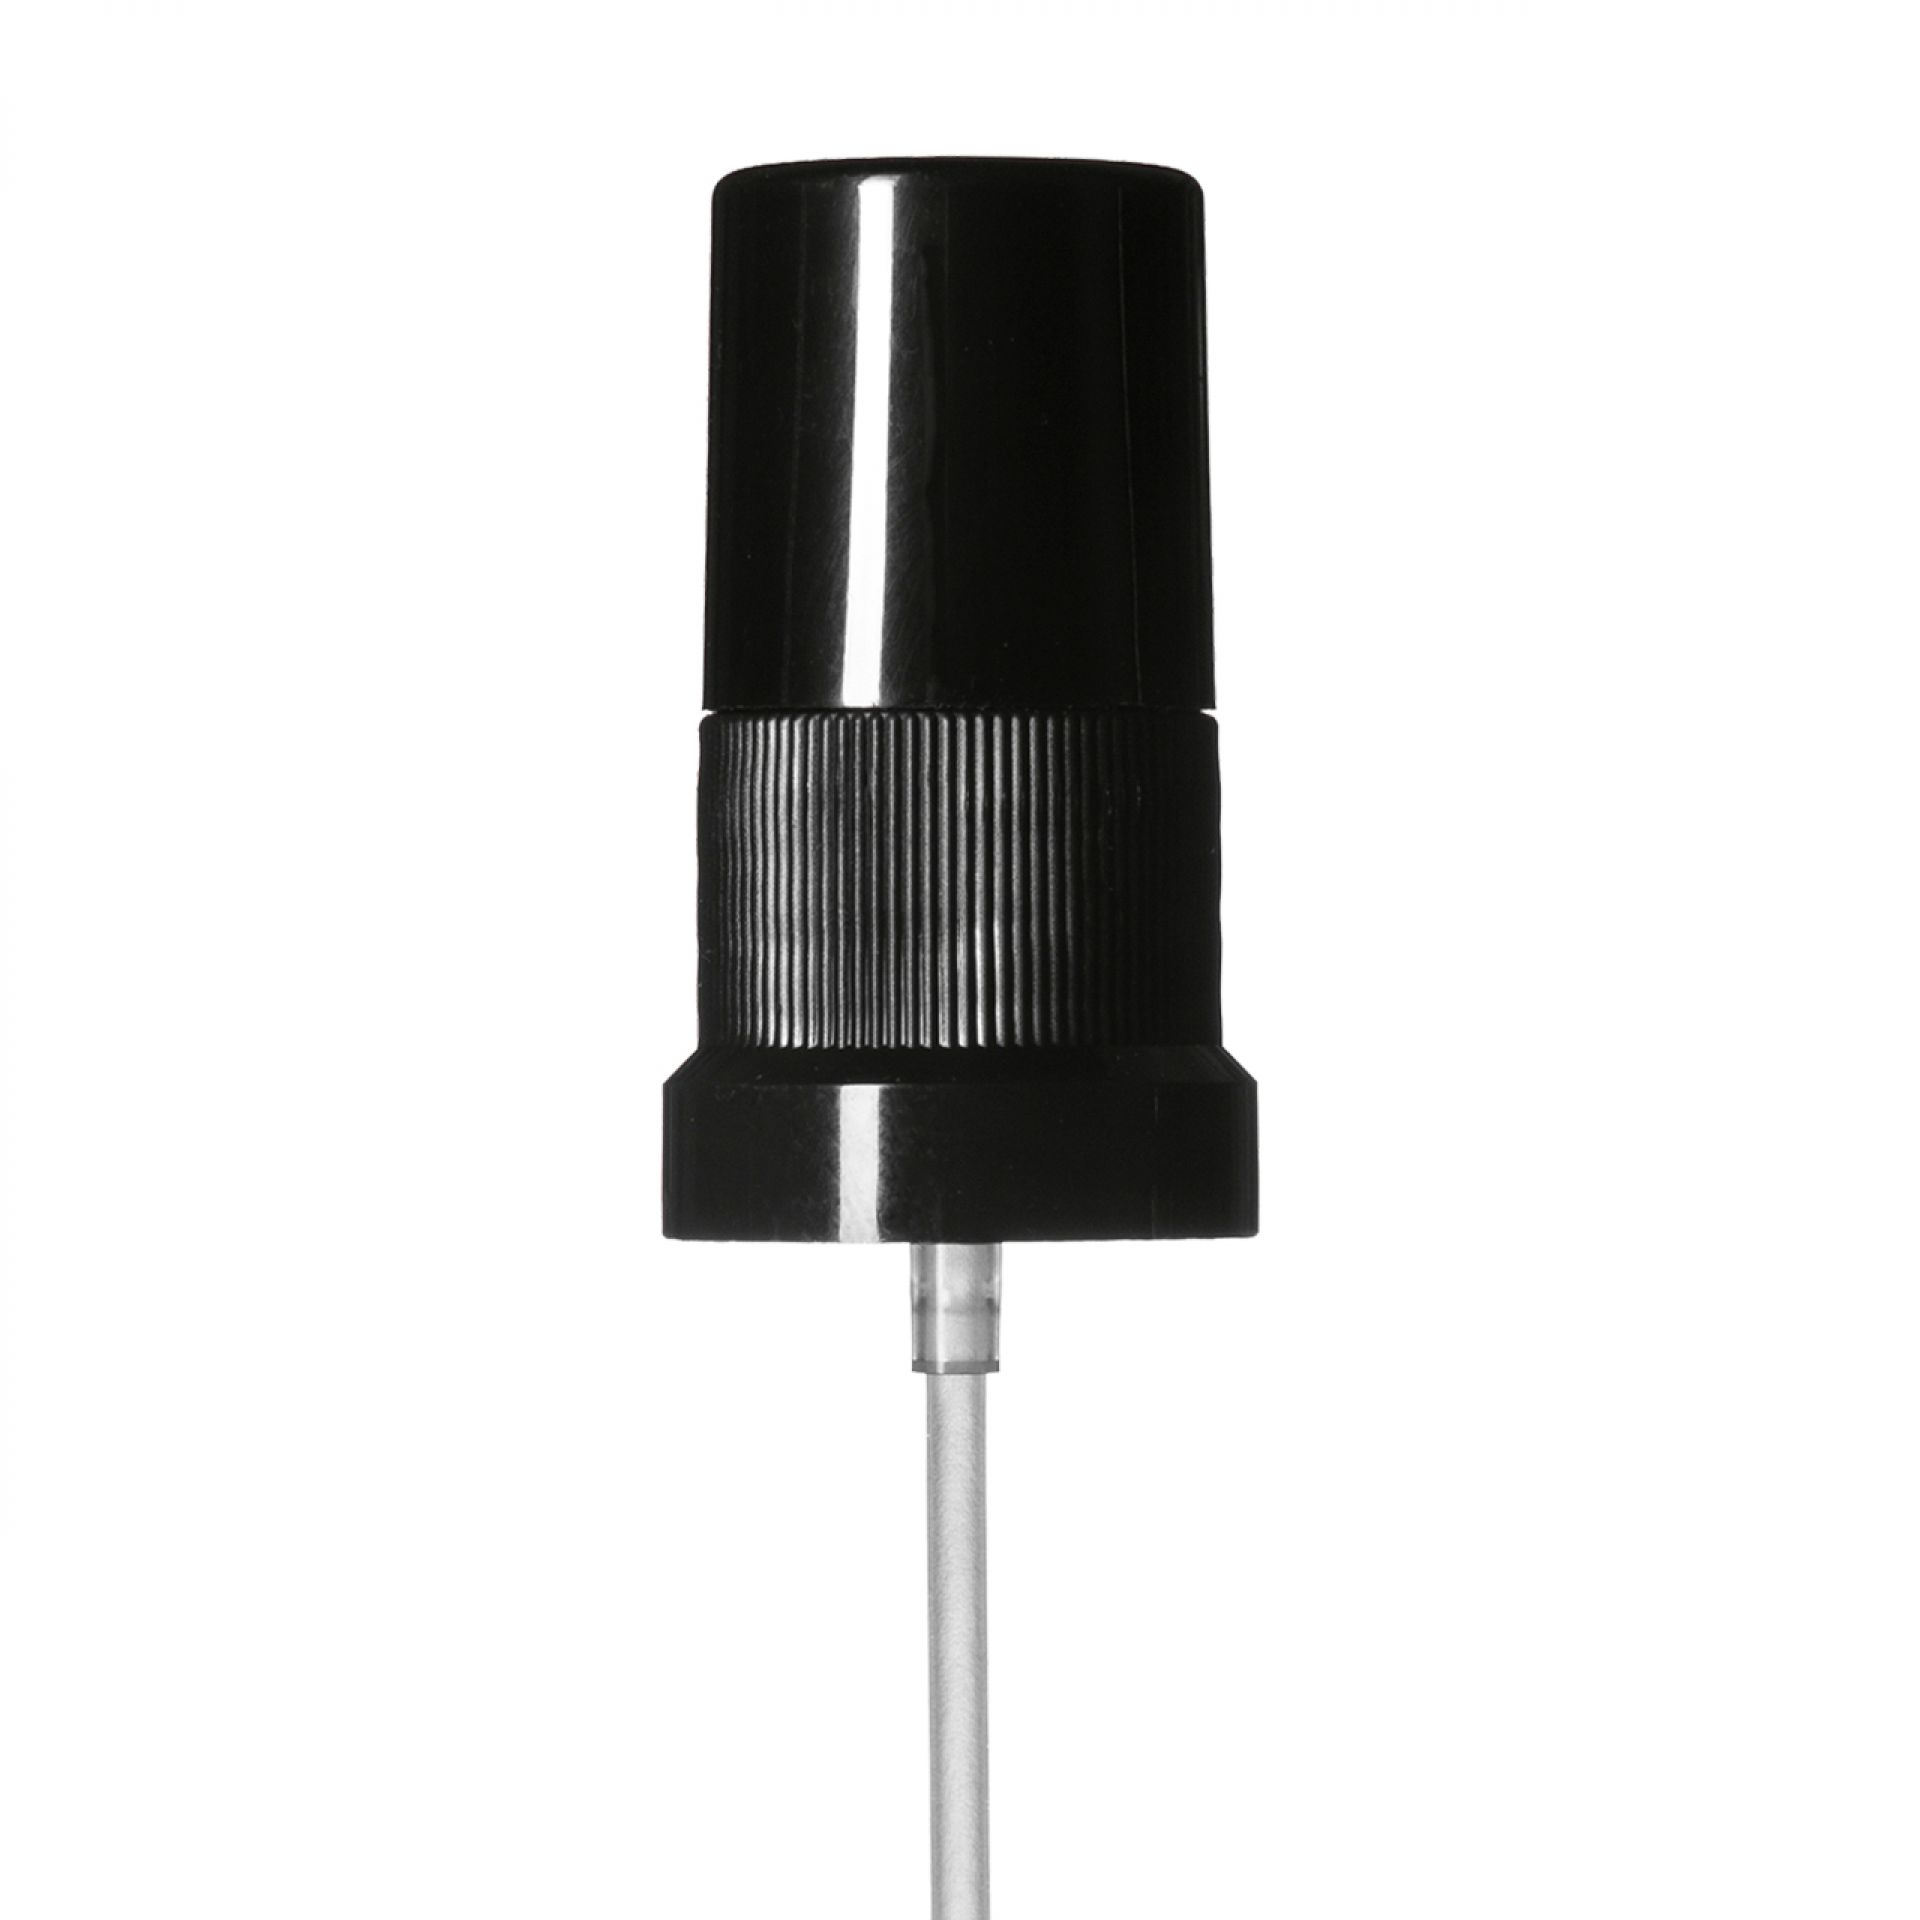 Mist sprayer Classic, DIN18, PP, black, ribbed, dose 0.10 ml, black overcap (Orion 30)